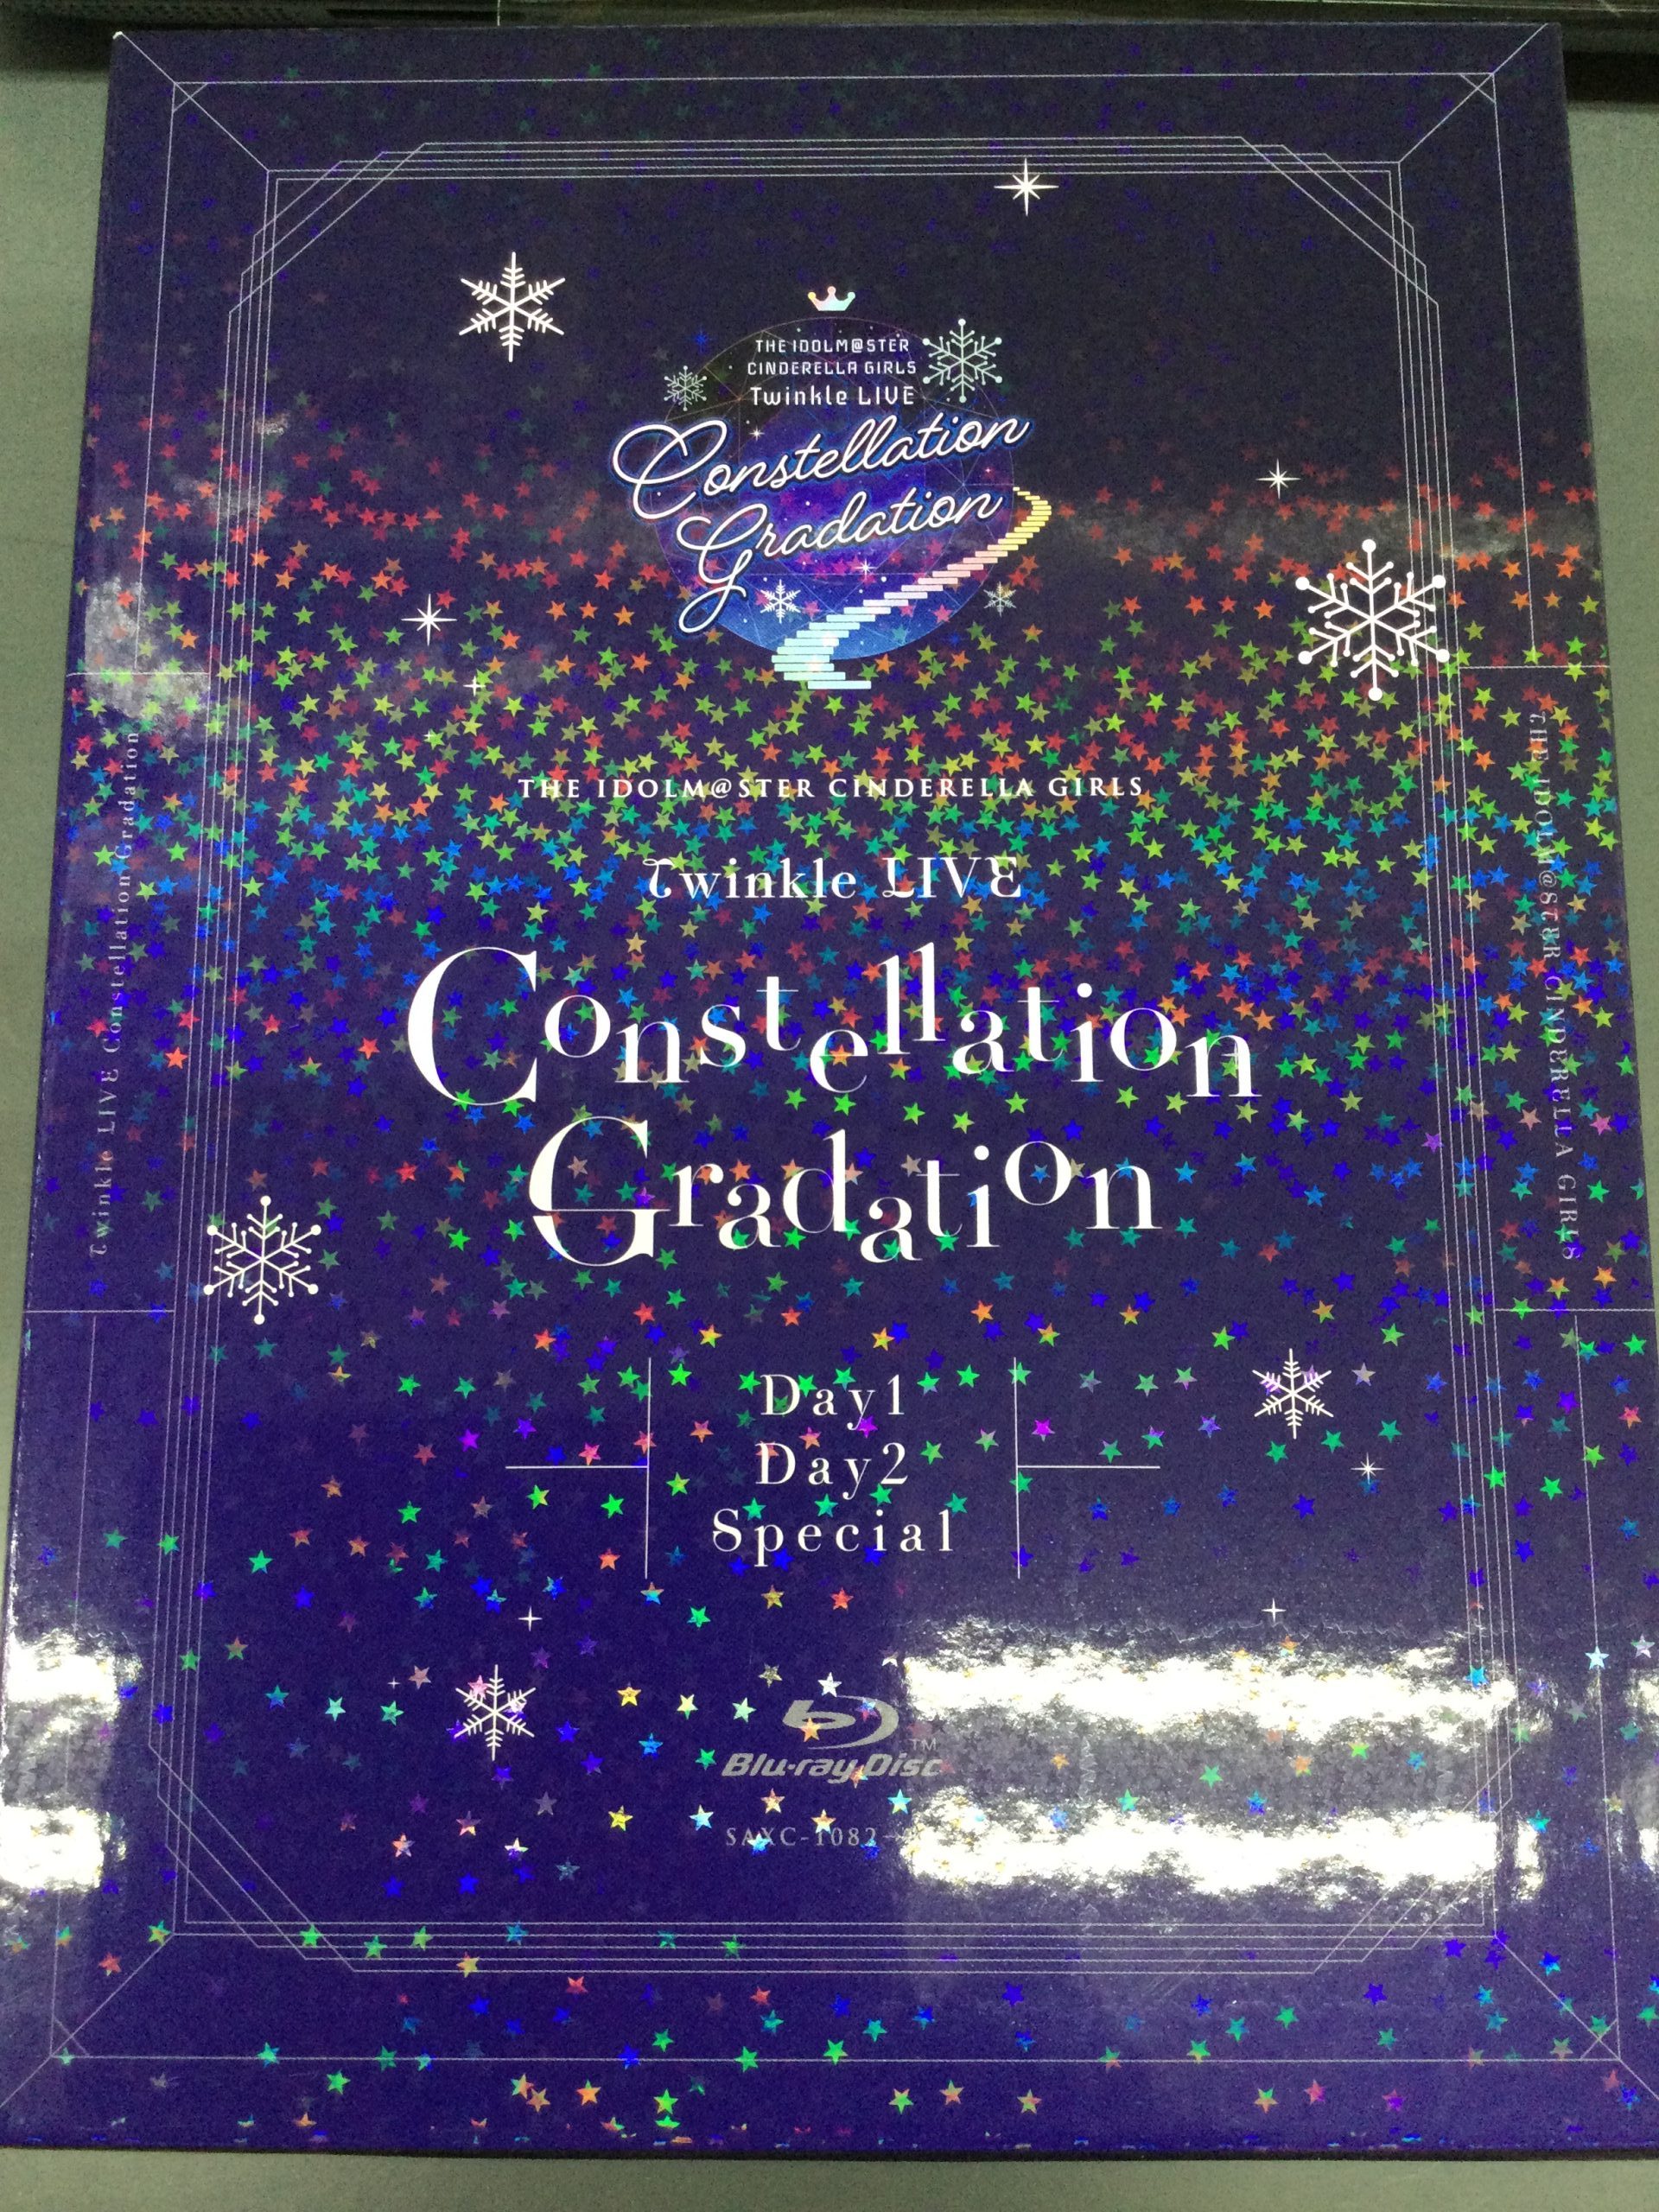 THE IDOLM＠STER CINDERELLA GIRLS Twinkle LIVE Constellation Gradation